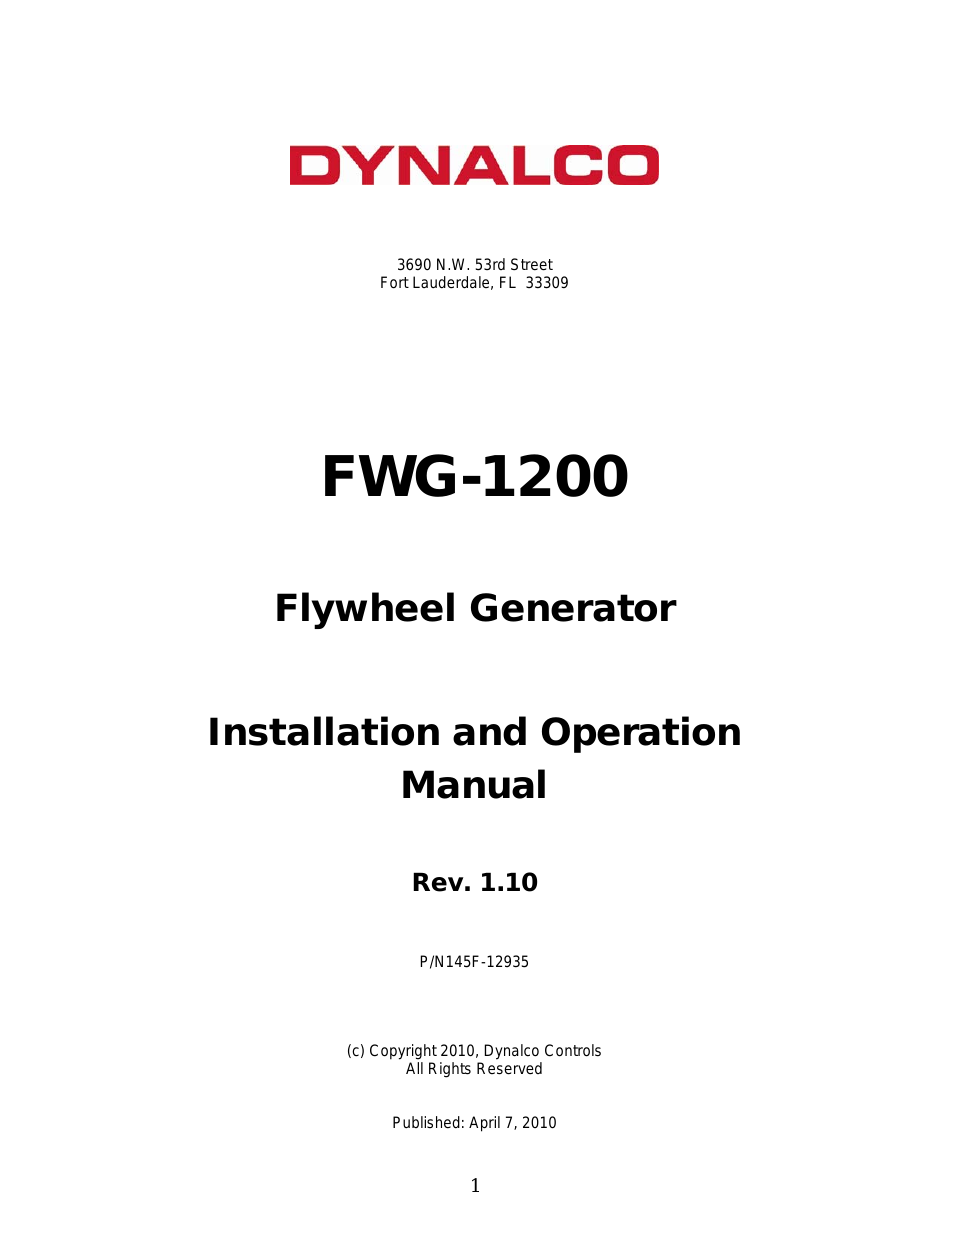 DYNA-GEN Flywheel Generator System